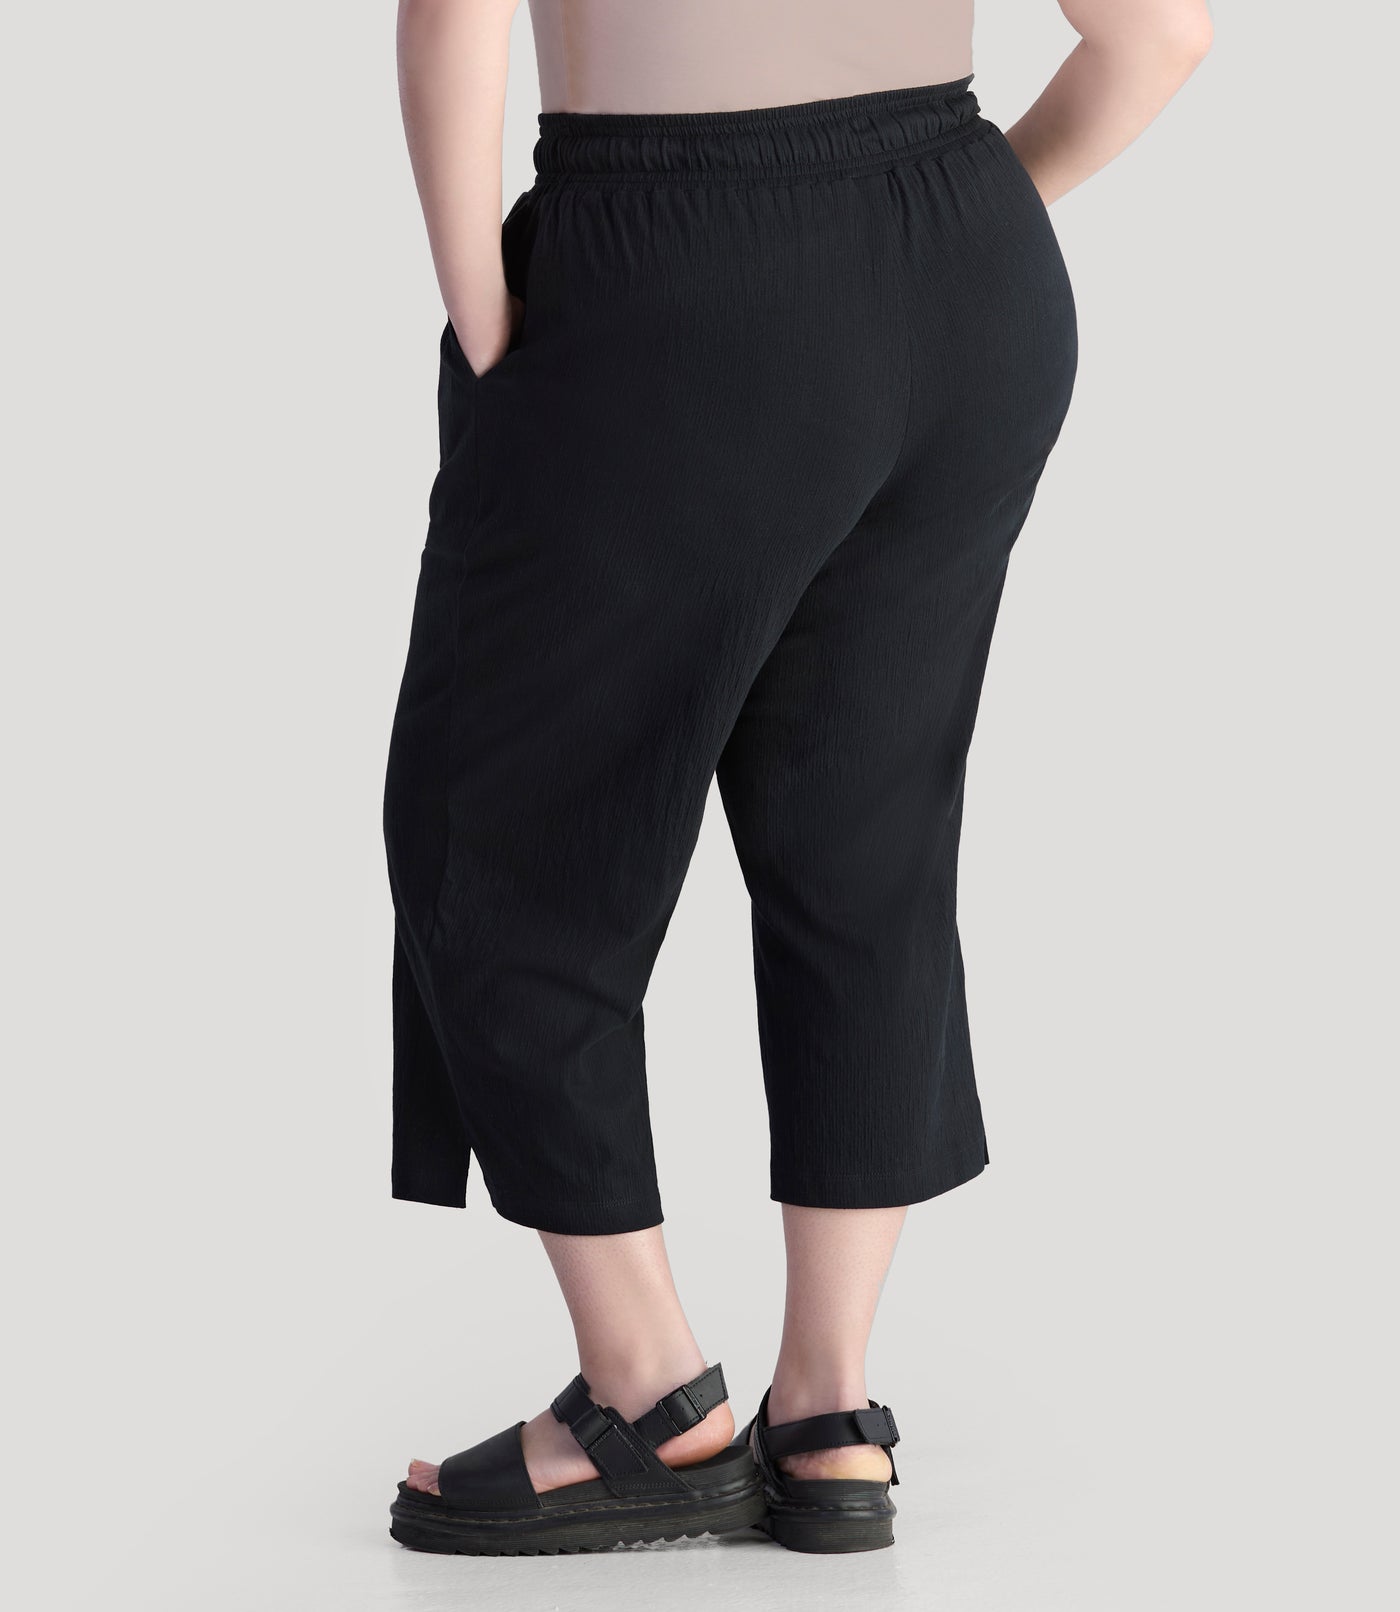 Plus size model, facing front, wearing JunoActive's EZ style cotton pocketed plus size capris in color black.